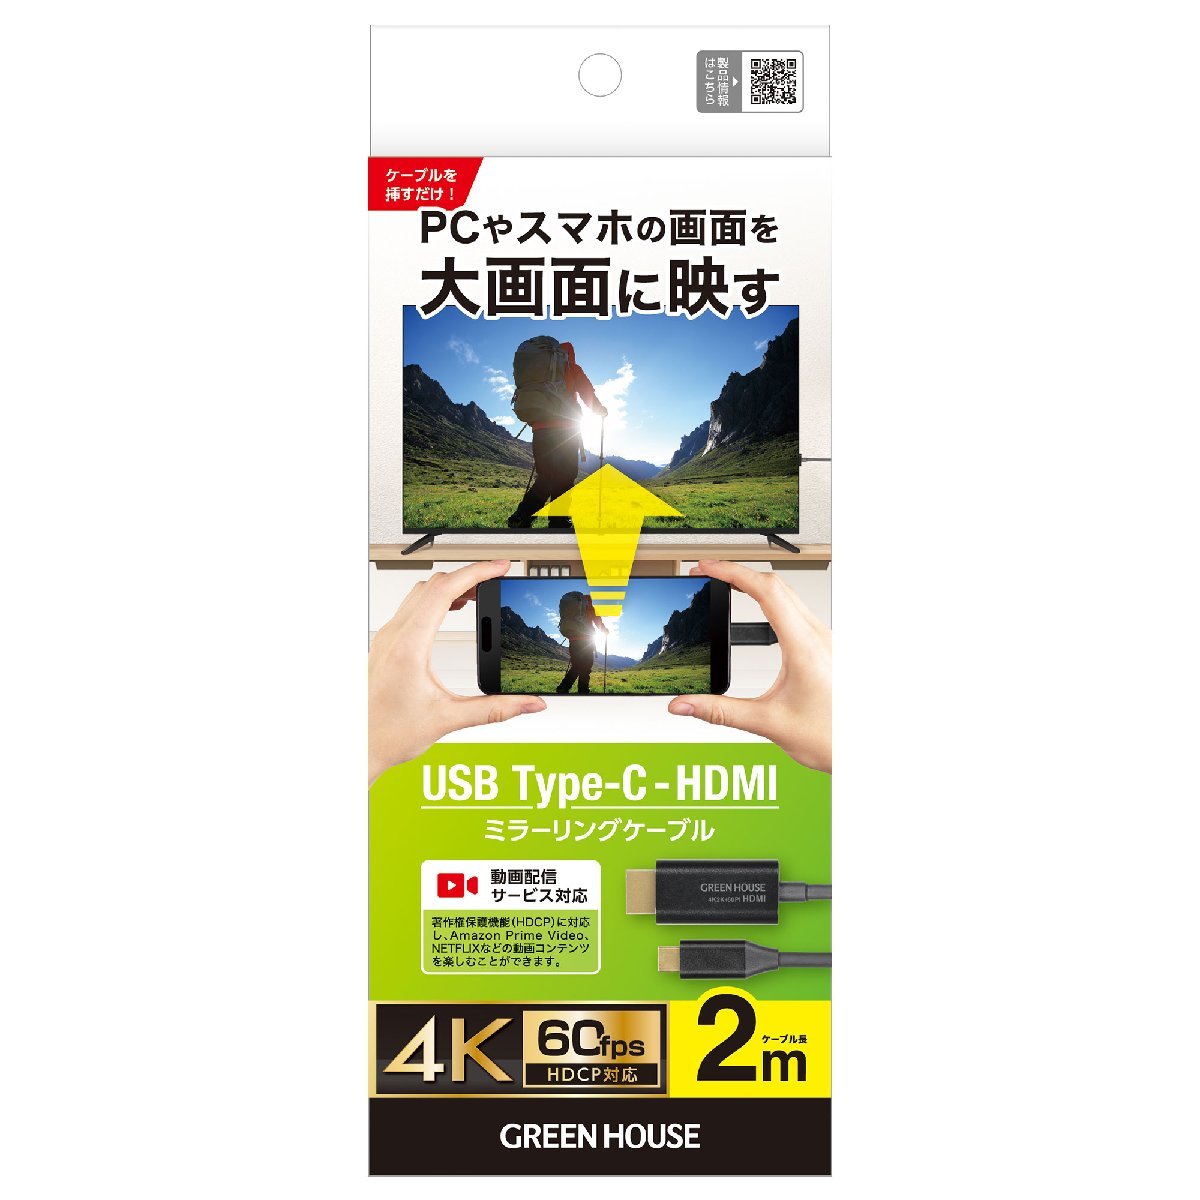 USB Type-C-HDMI зеркало кольцо кабель TypeC-HDM 2m Alt режим соответствует зеленый house GH-HALTB2-BK/3657x 1 шт. 